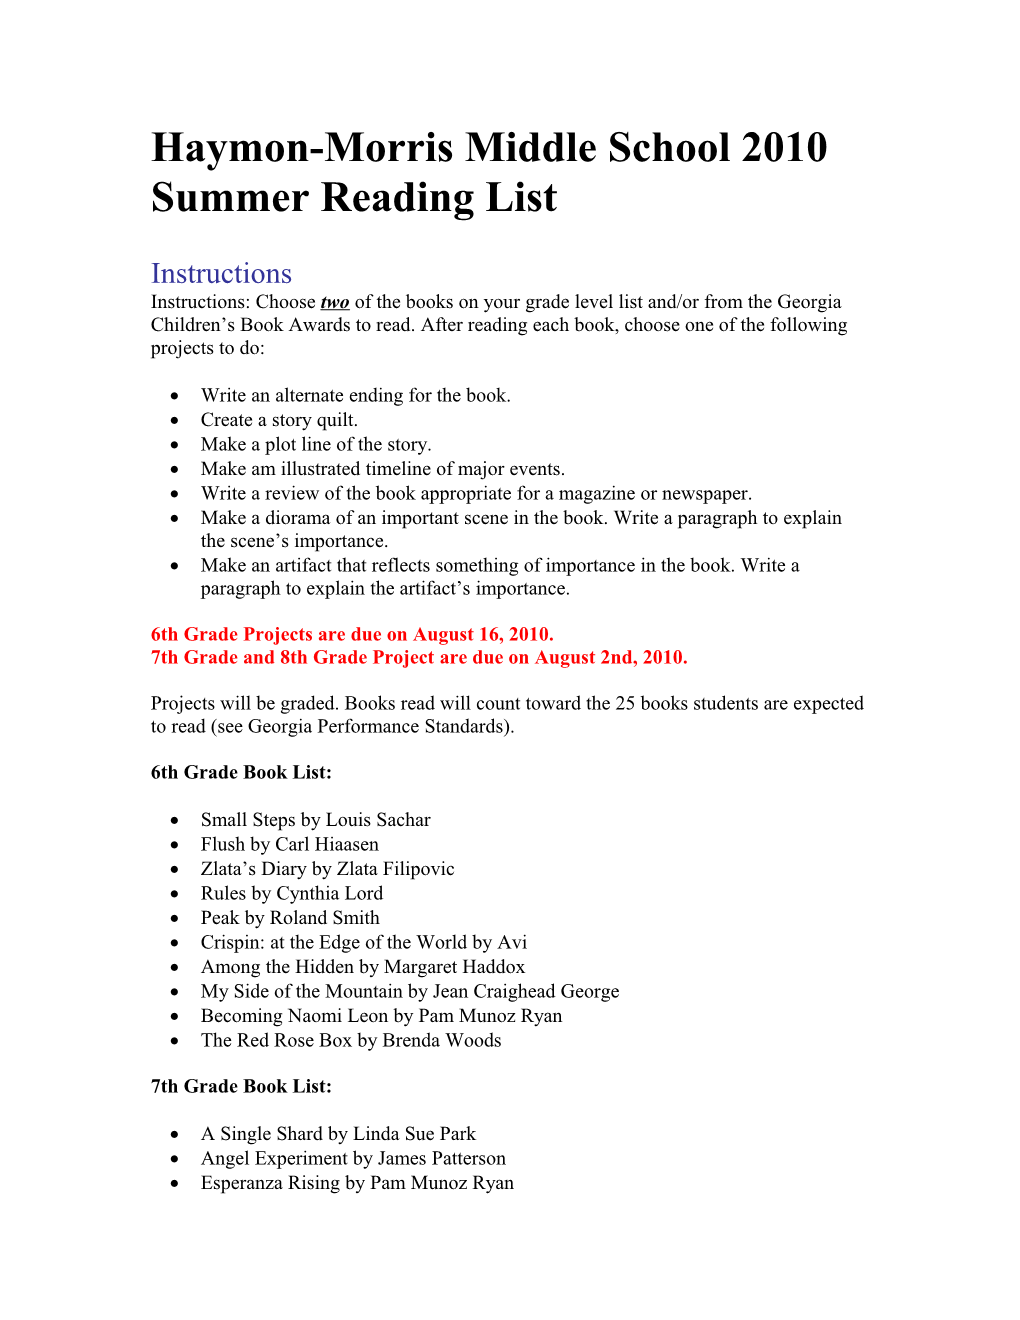 Haymon-Morris Middle School 2010 Summer Reading List